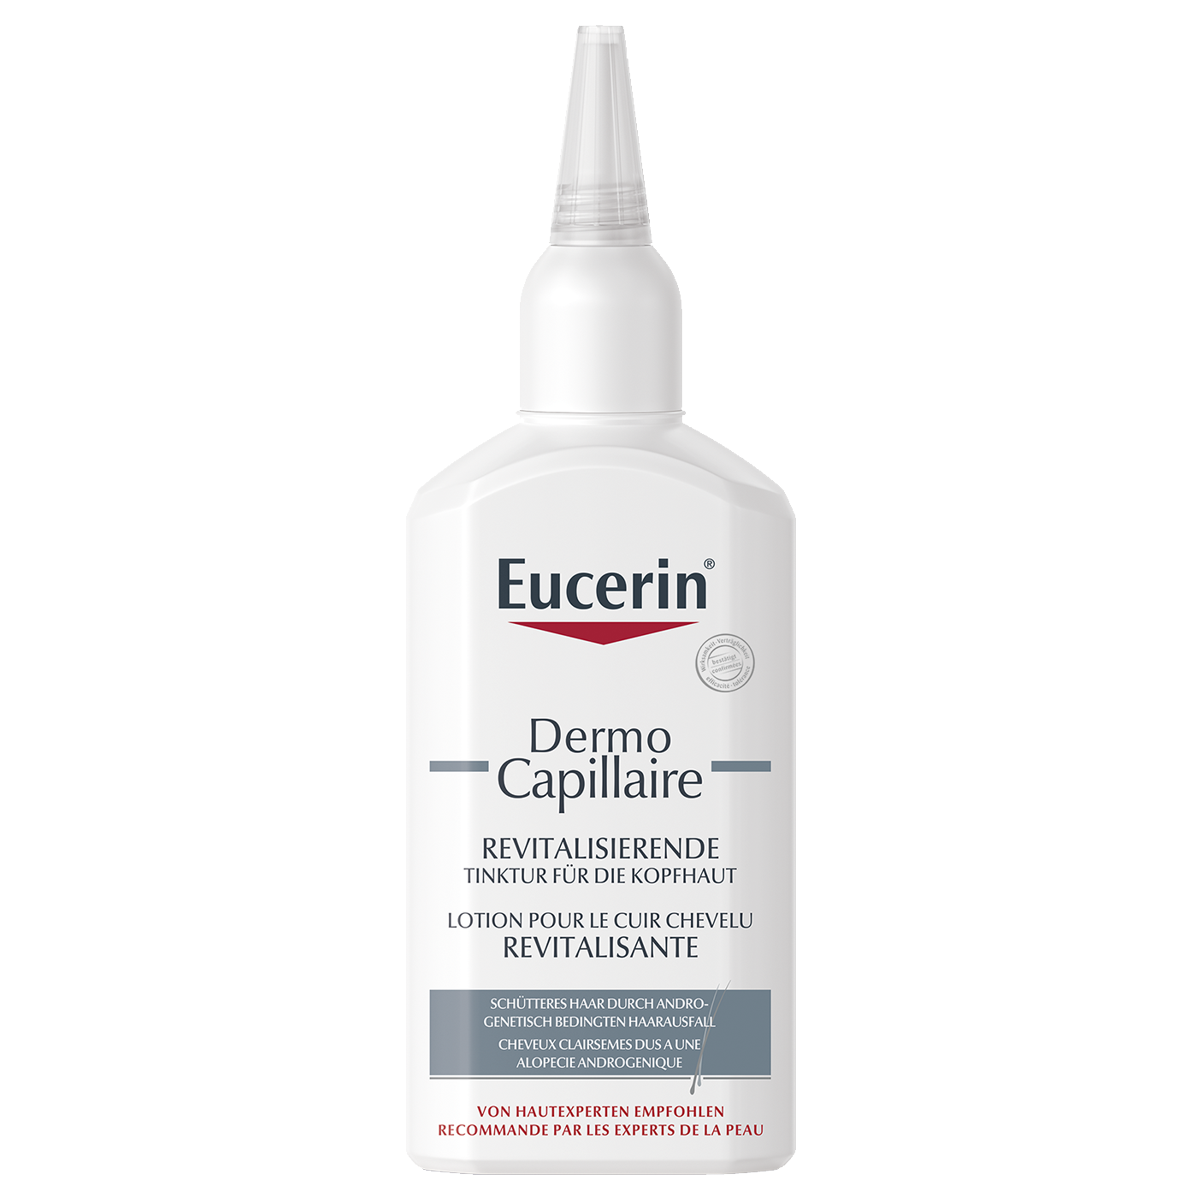 Eucerin DermoCapillaire revitalisierende Tinktur 100 ml